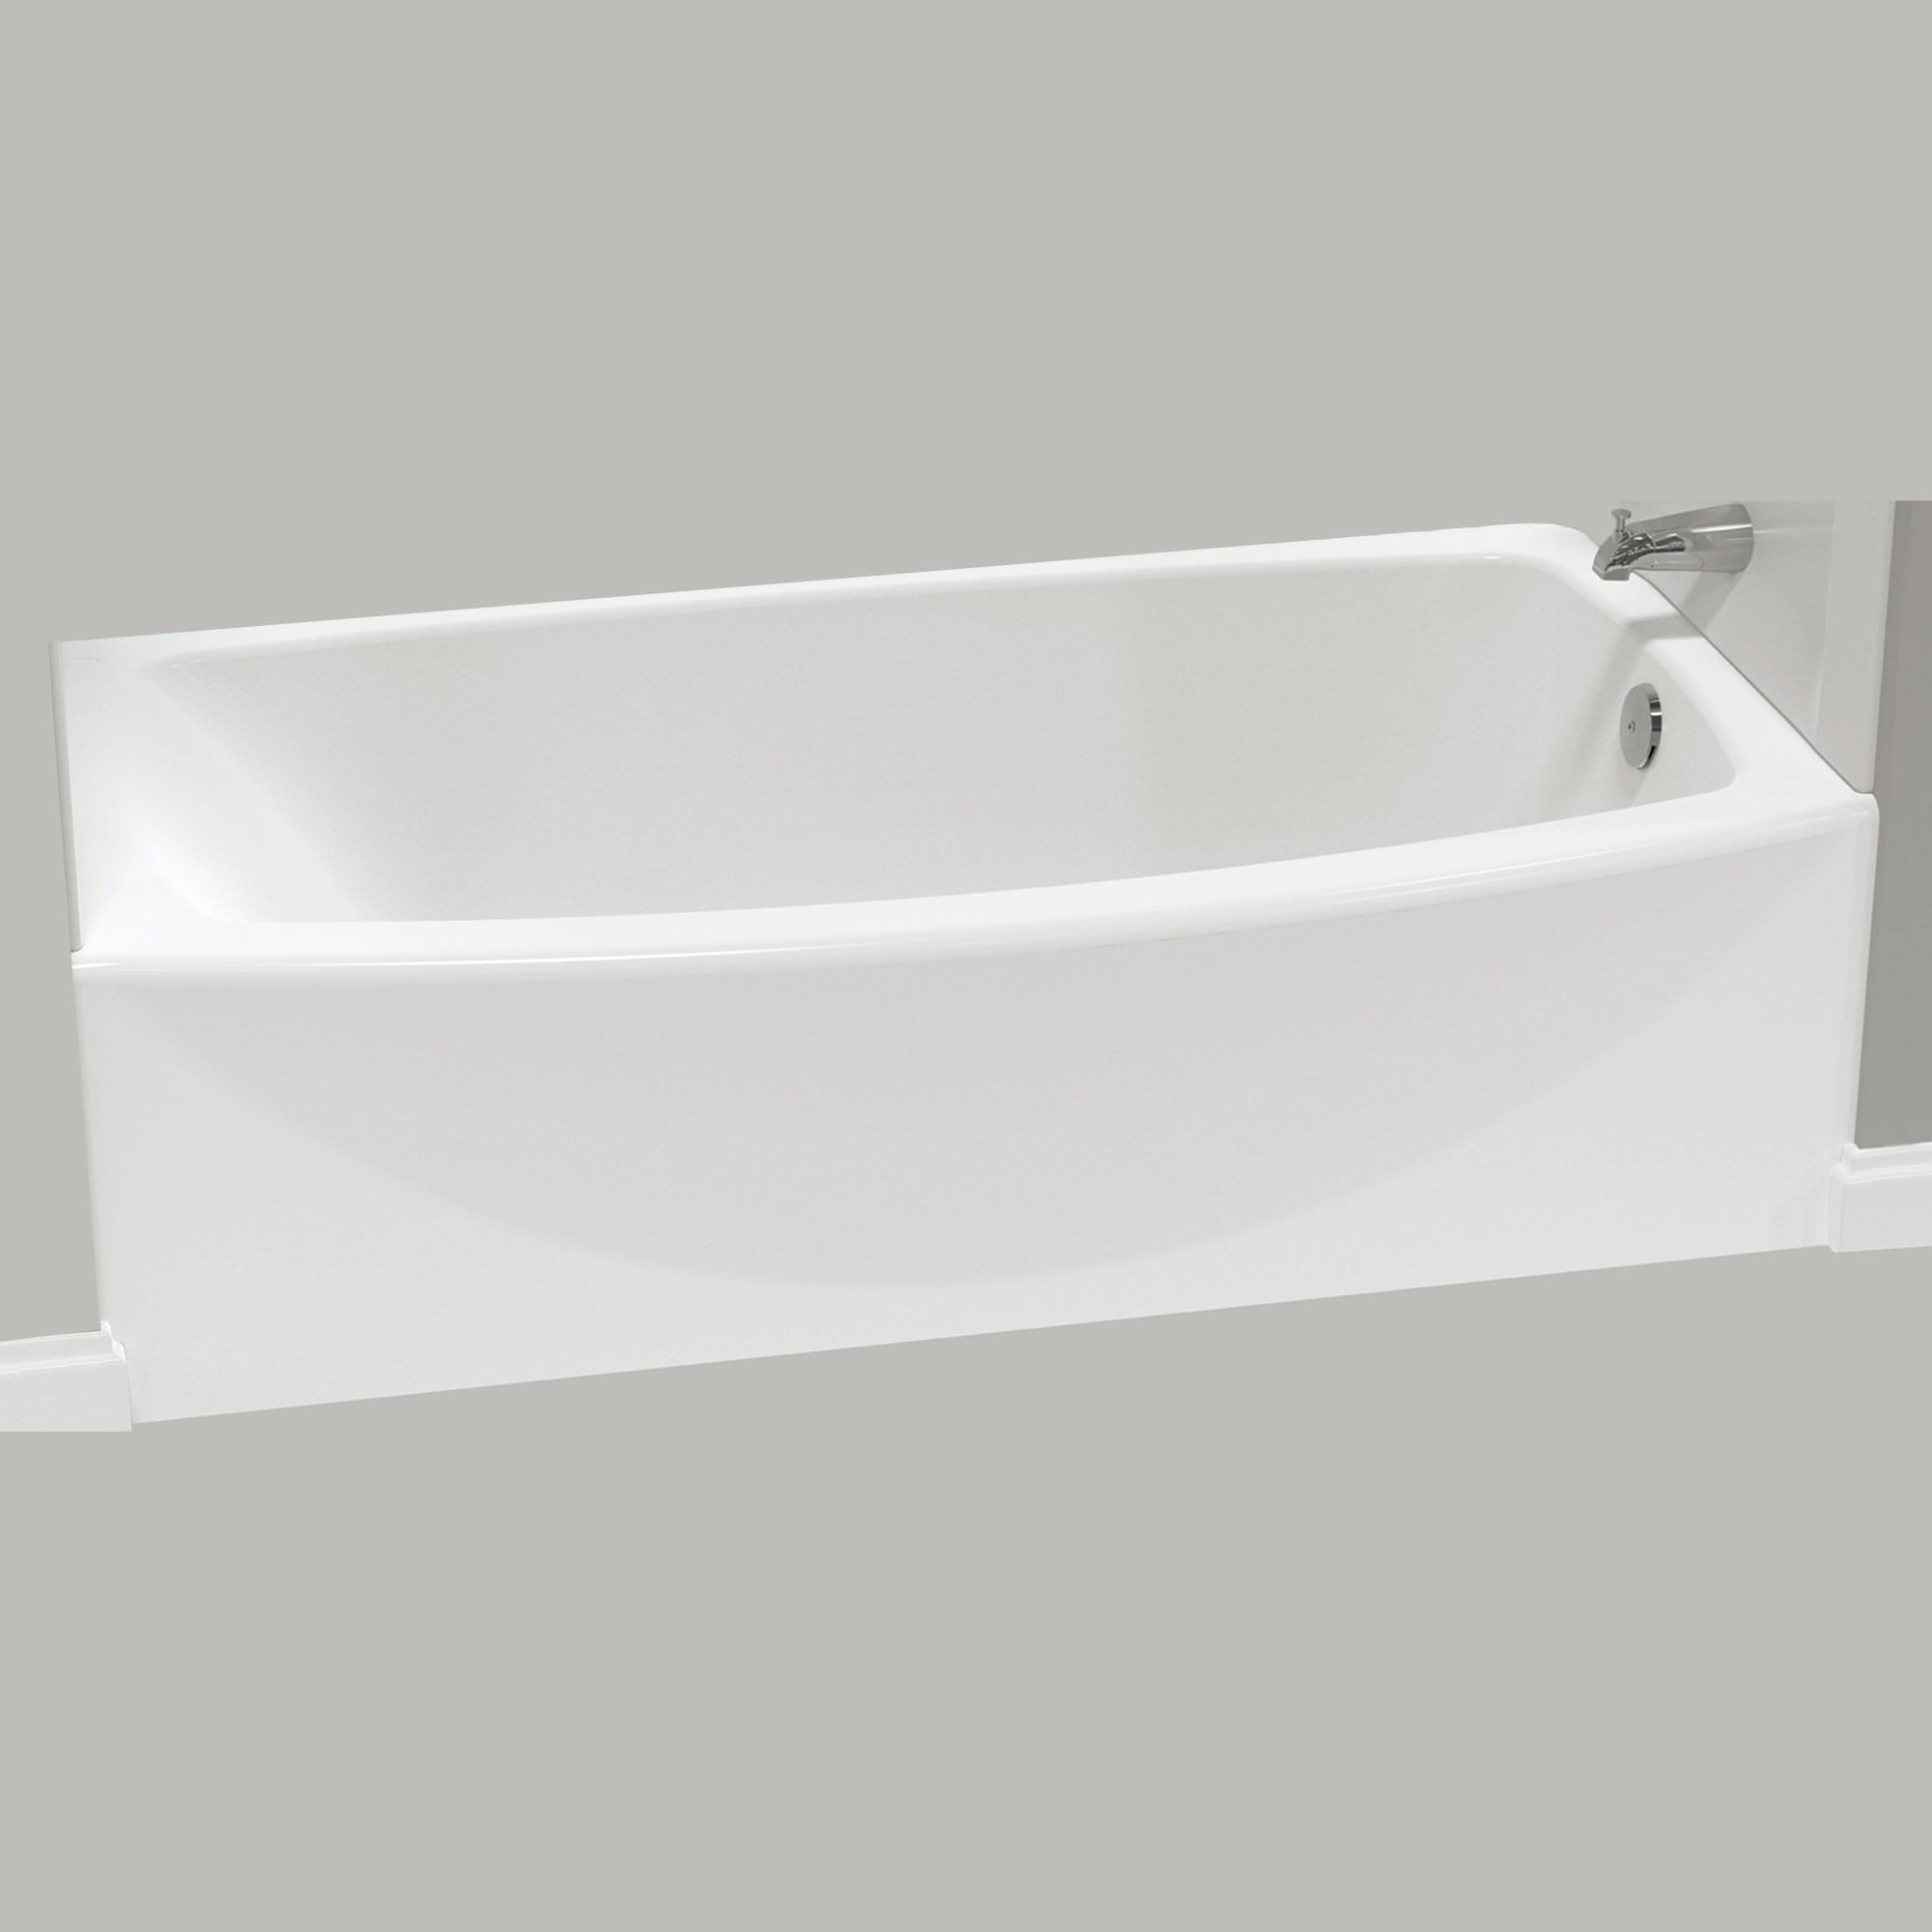 Saver 60x34 inch Integral Apron Bathtub Right Hand Drain ARCTIC